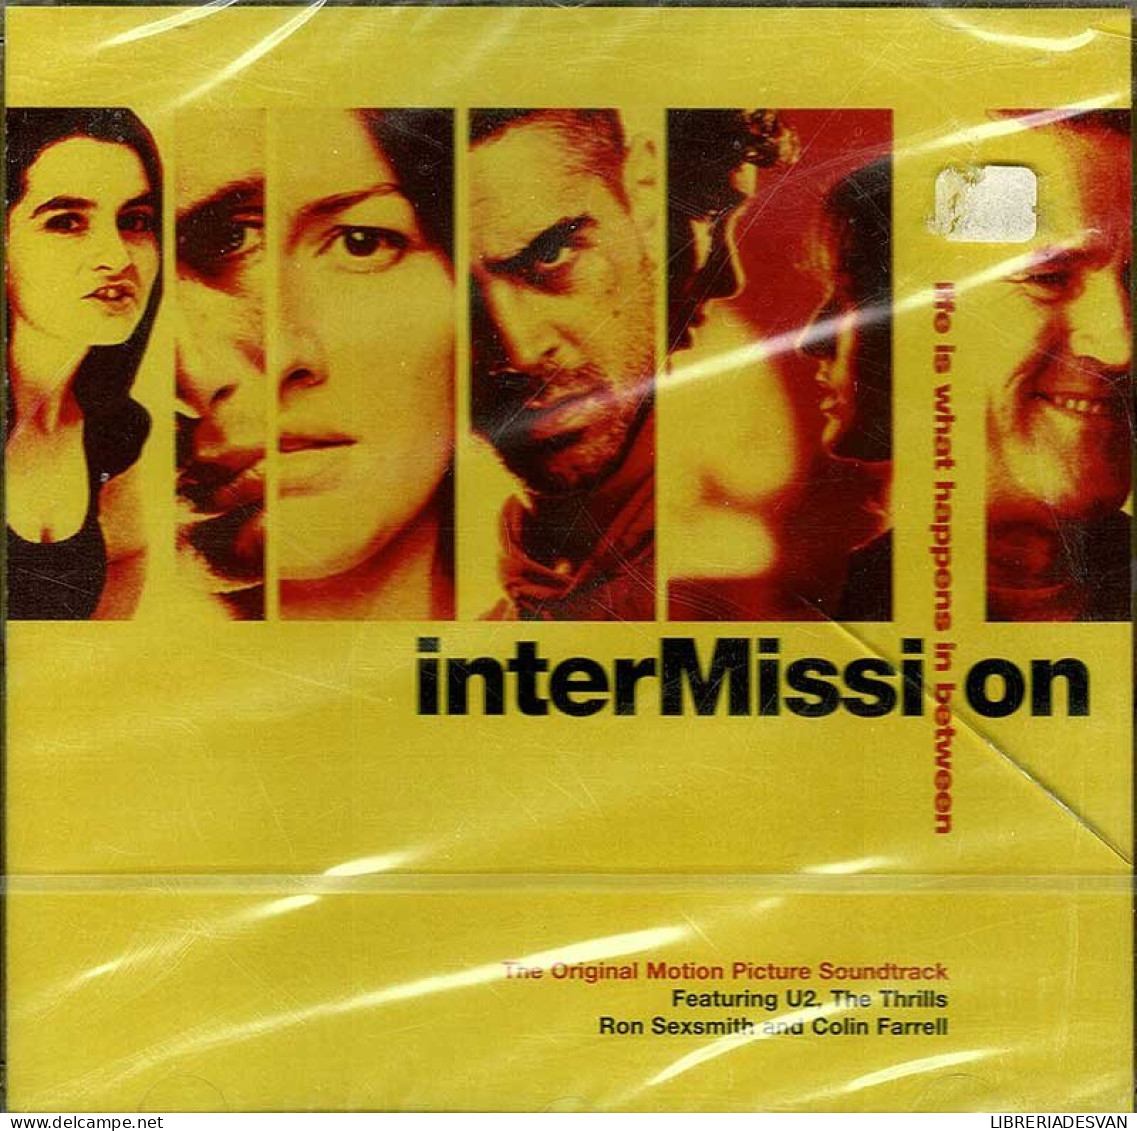 Intermission - Life Is What Happens In Between (The Original Motion Picture Soundtrack). CD - Musique De Films